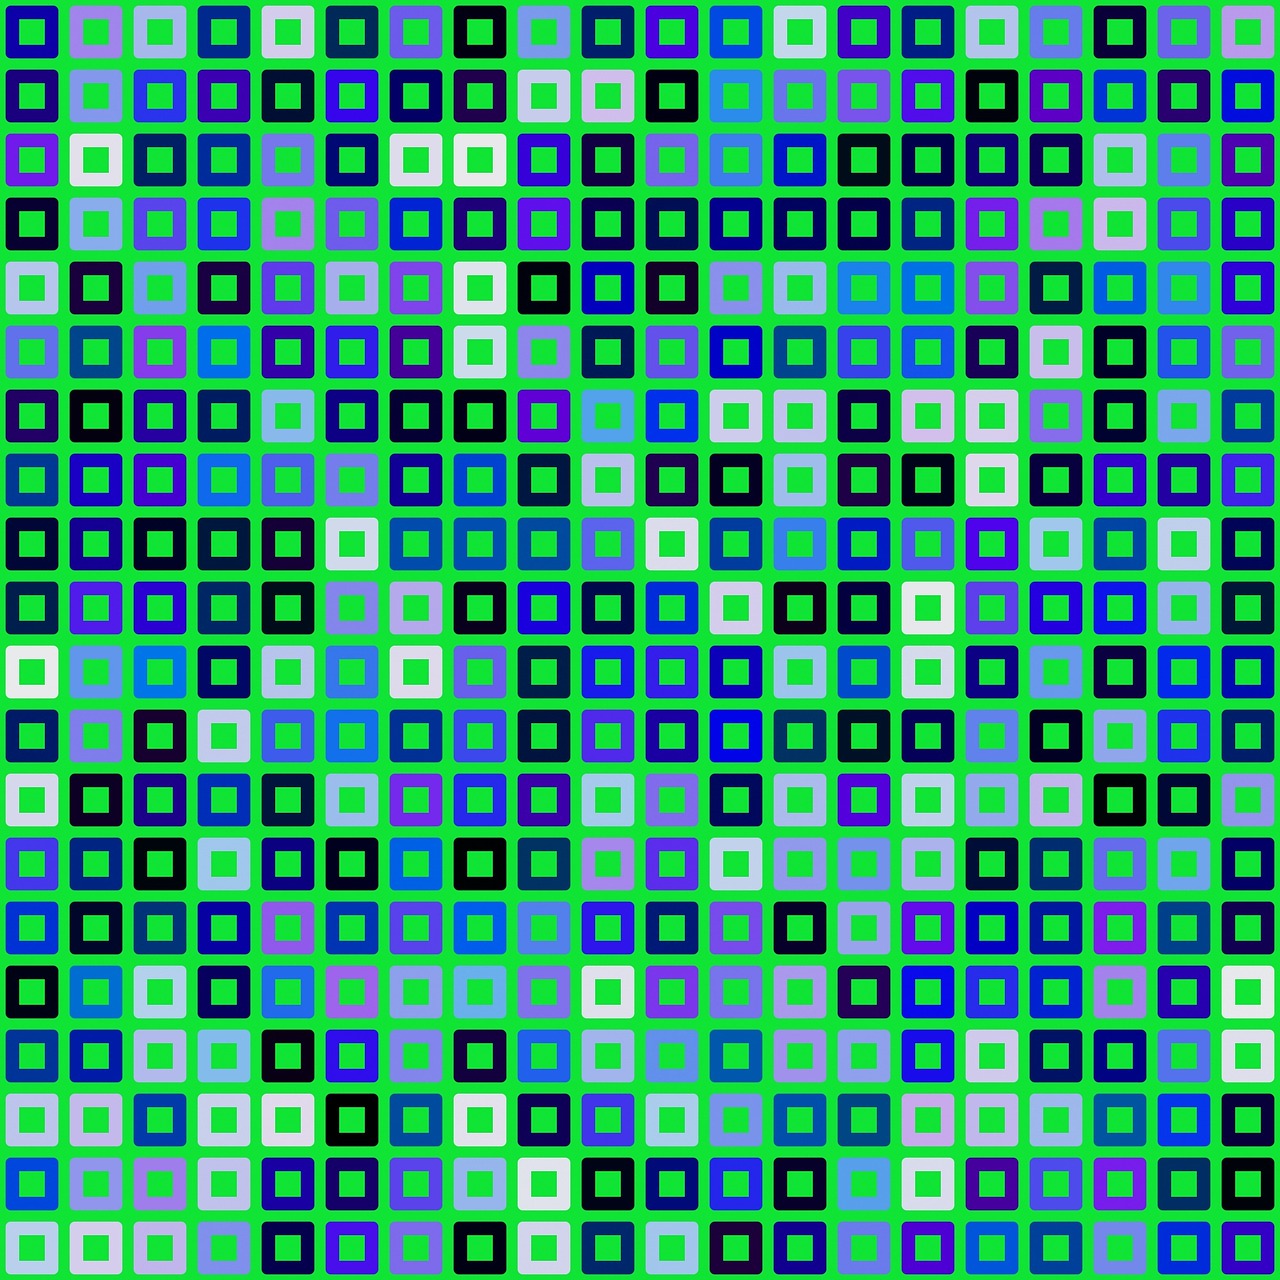 pattern square design free photo